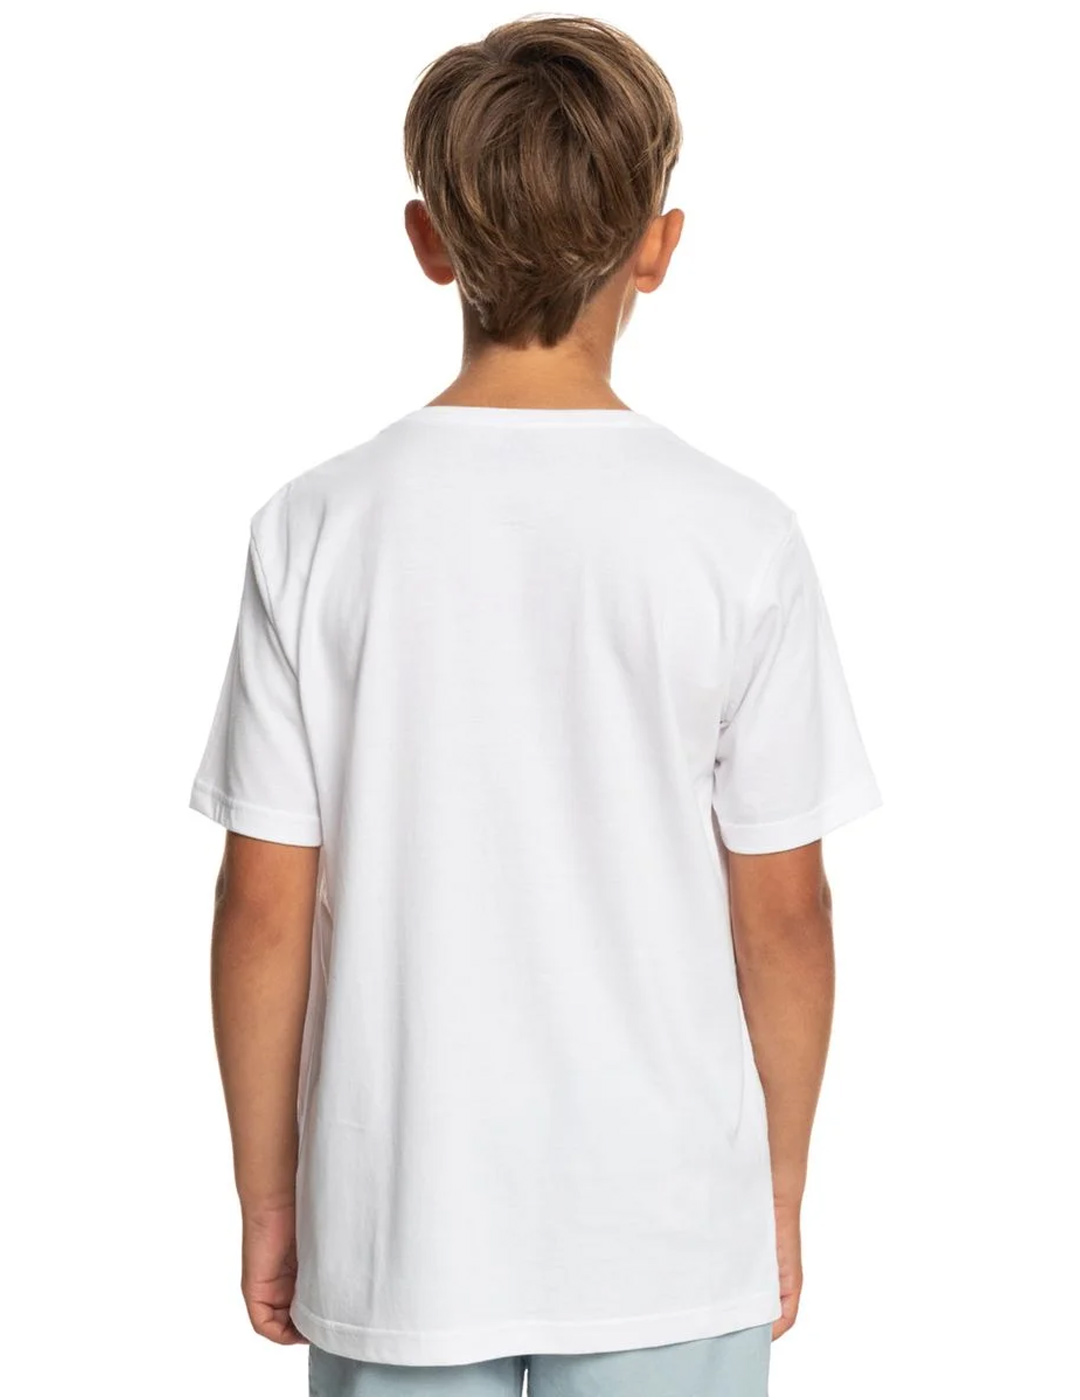 camiseta quiksilver manga corta niño SUNSETSESSION blanco